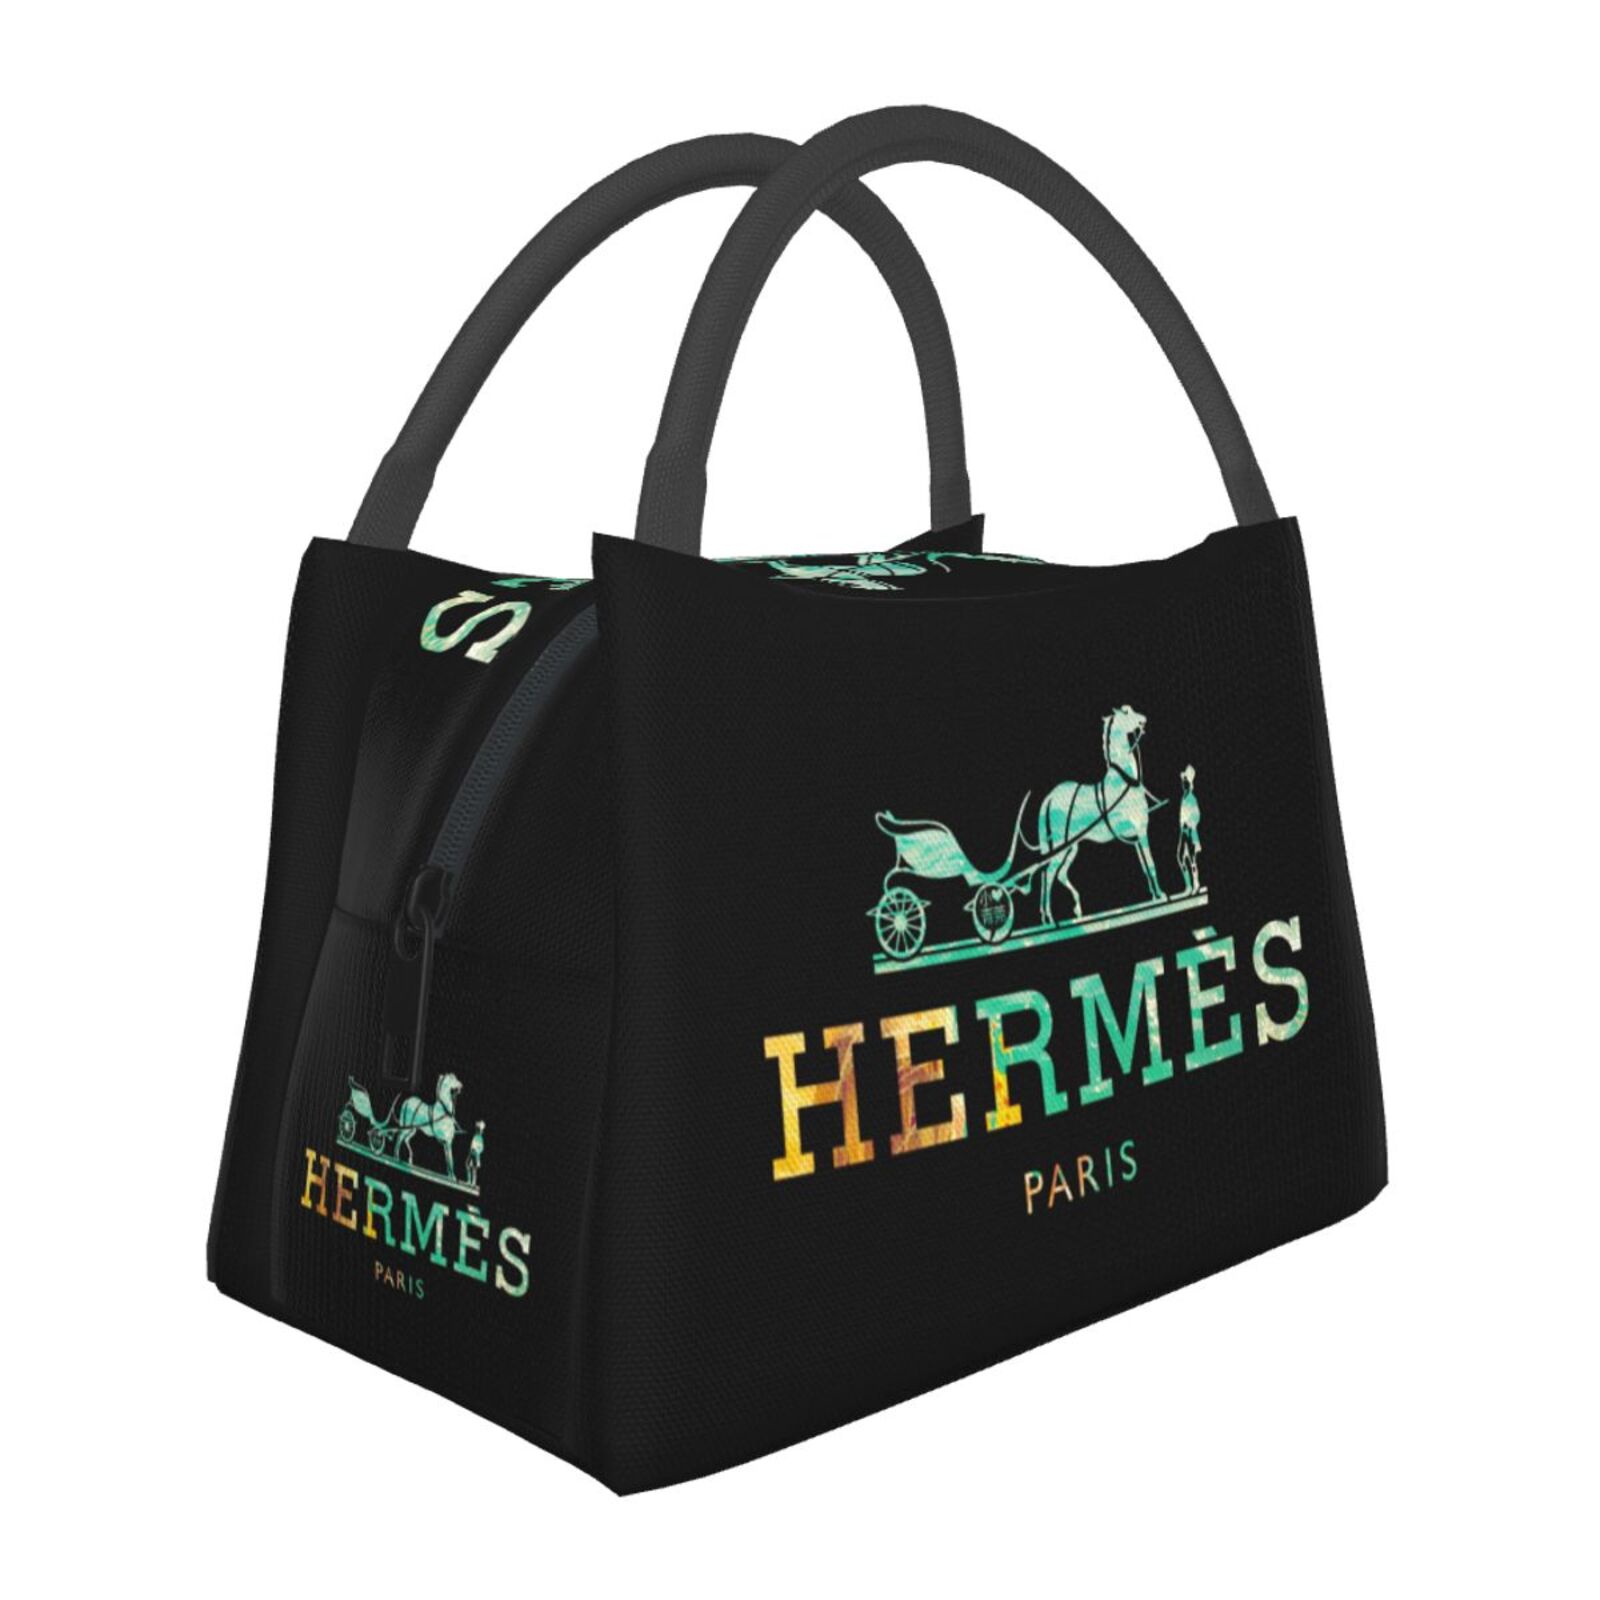 Hermes Storage - Best Price in Singapore - Oct 2023